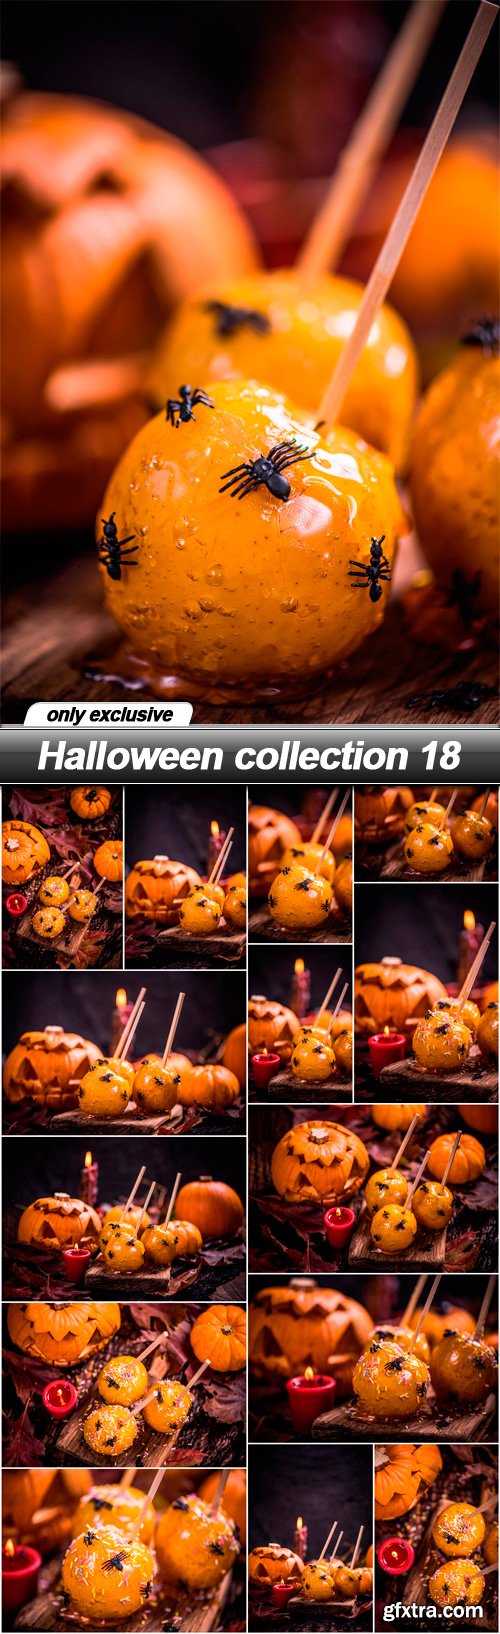 Halloween collection 18 - 14 UHQ JPEG